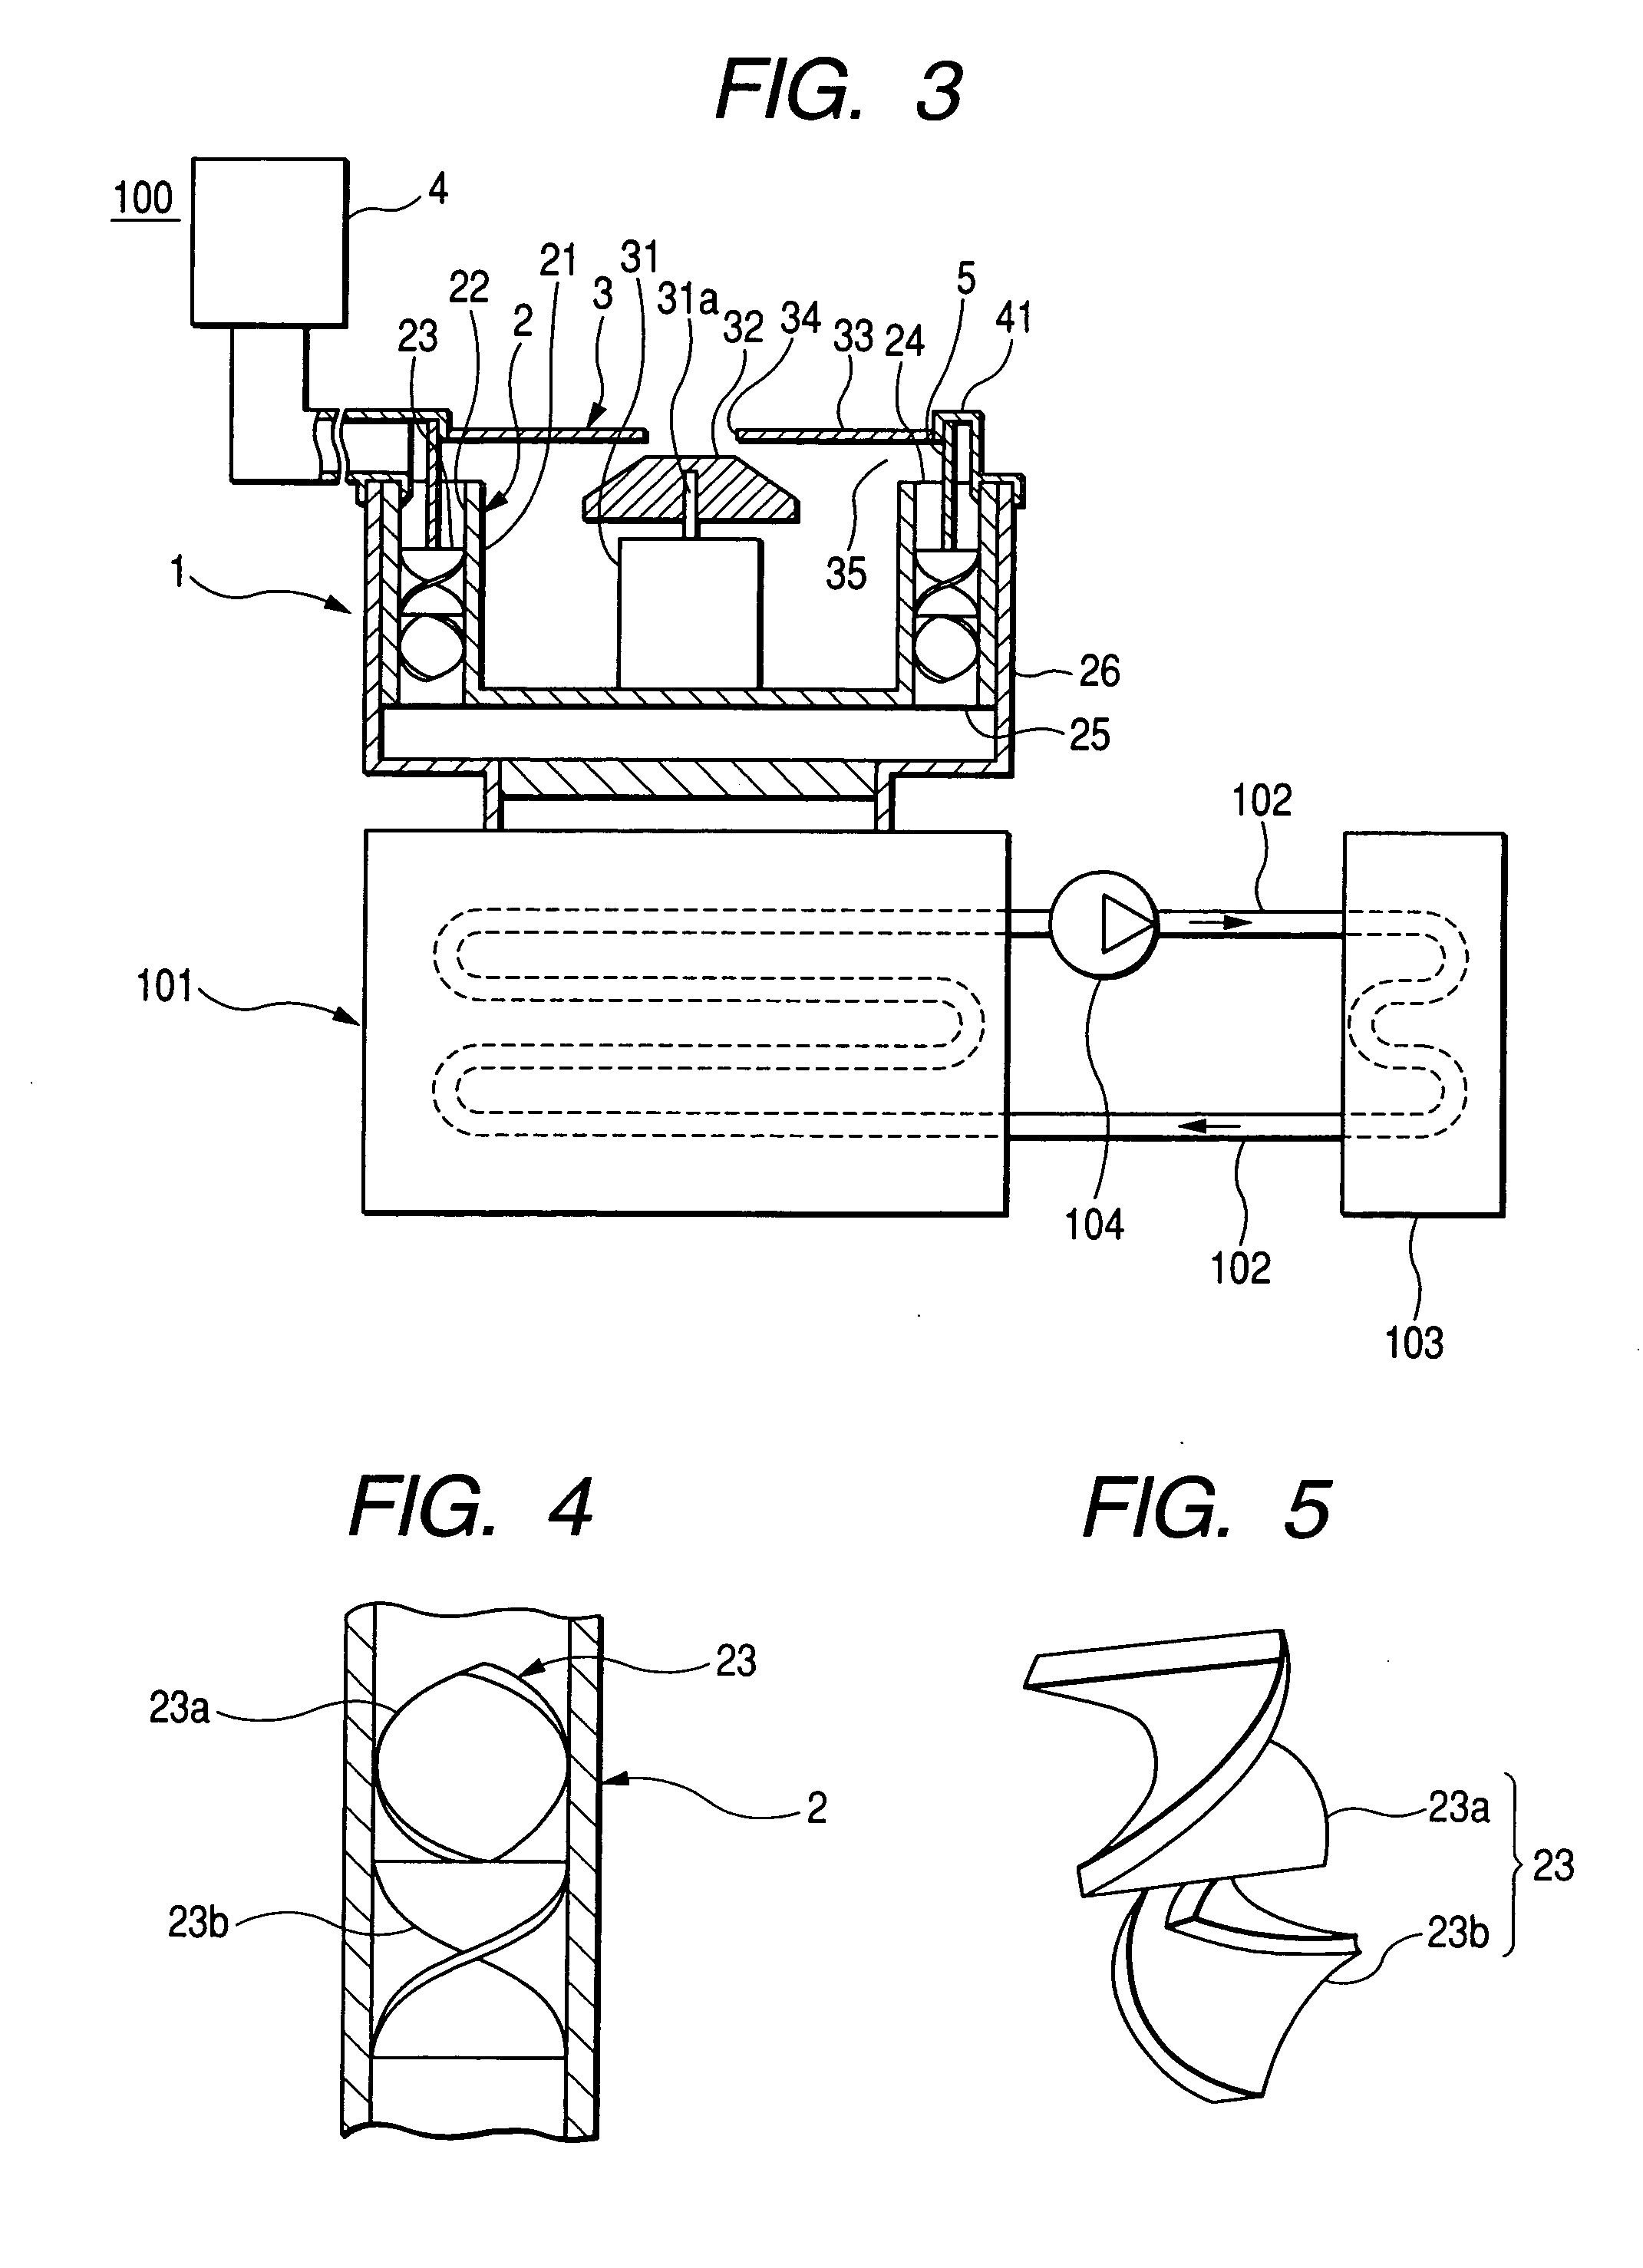 Gas mixing apparatus